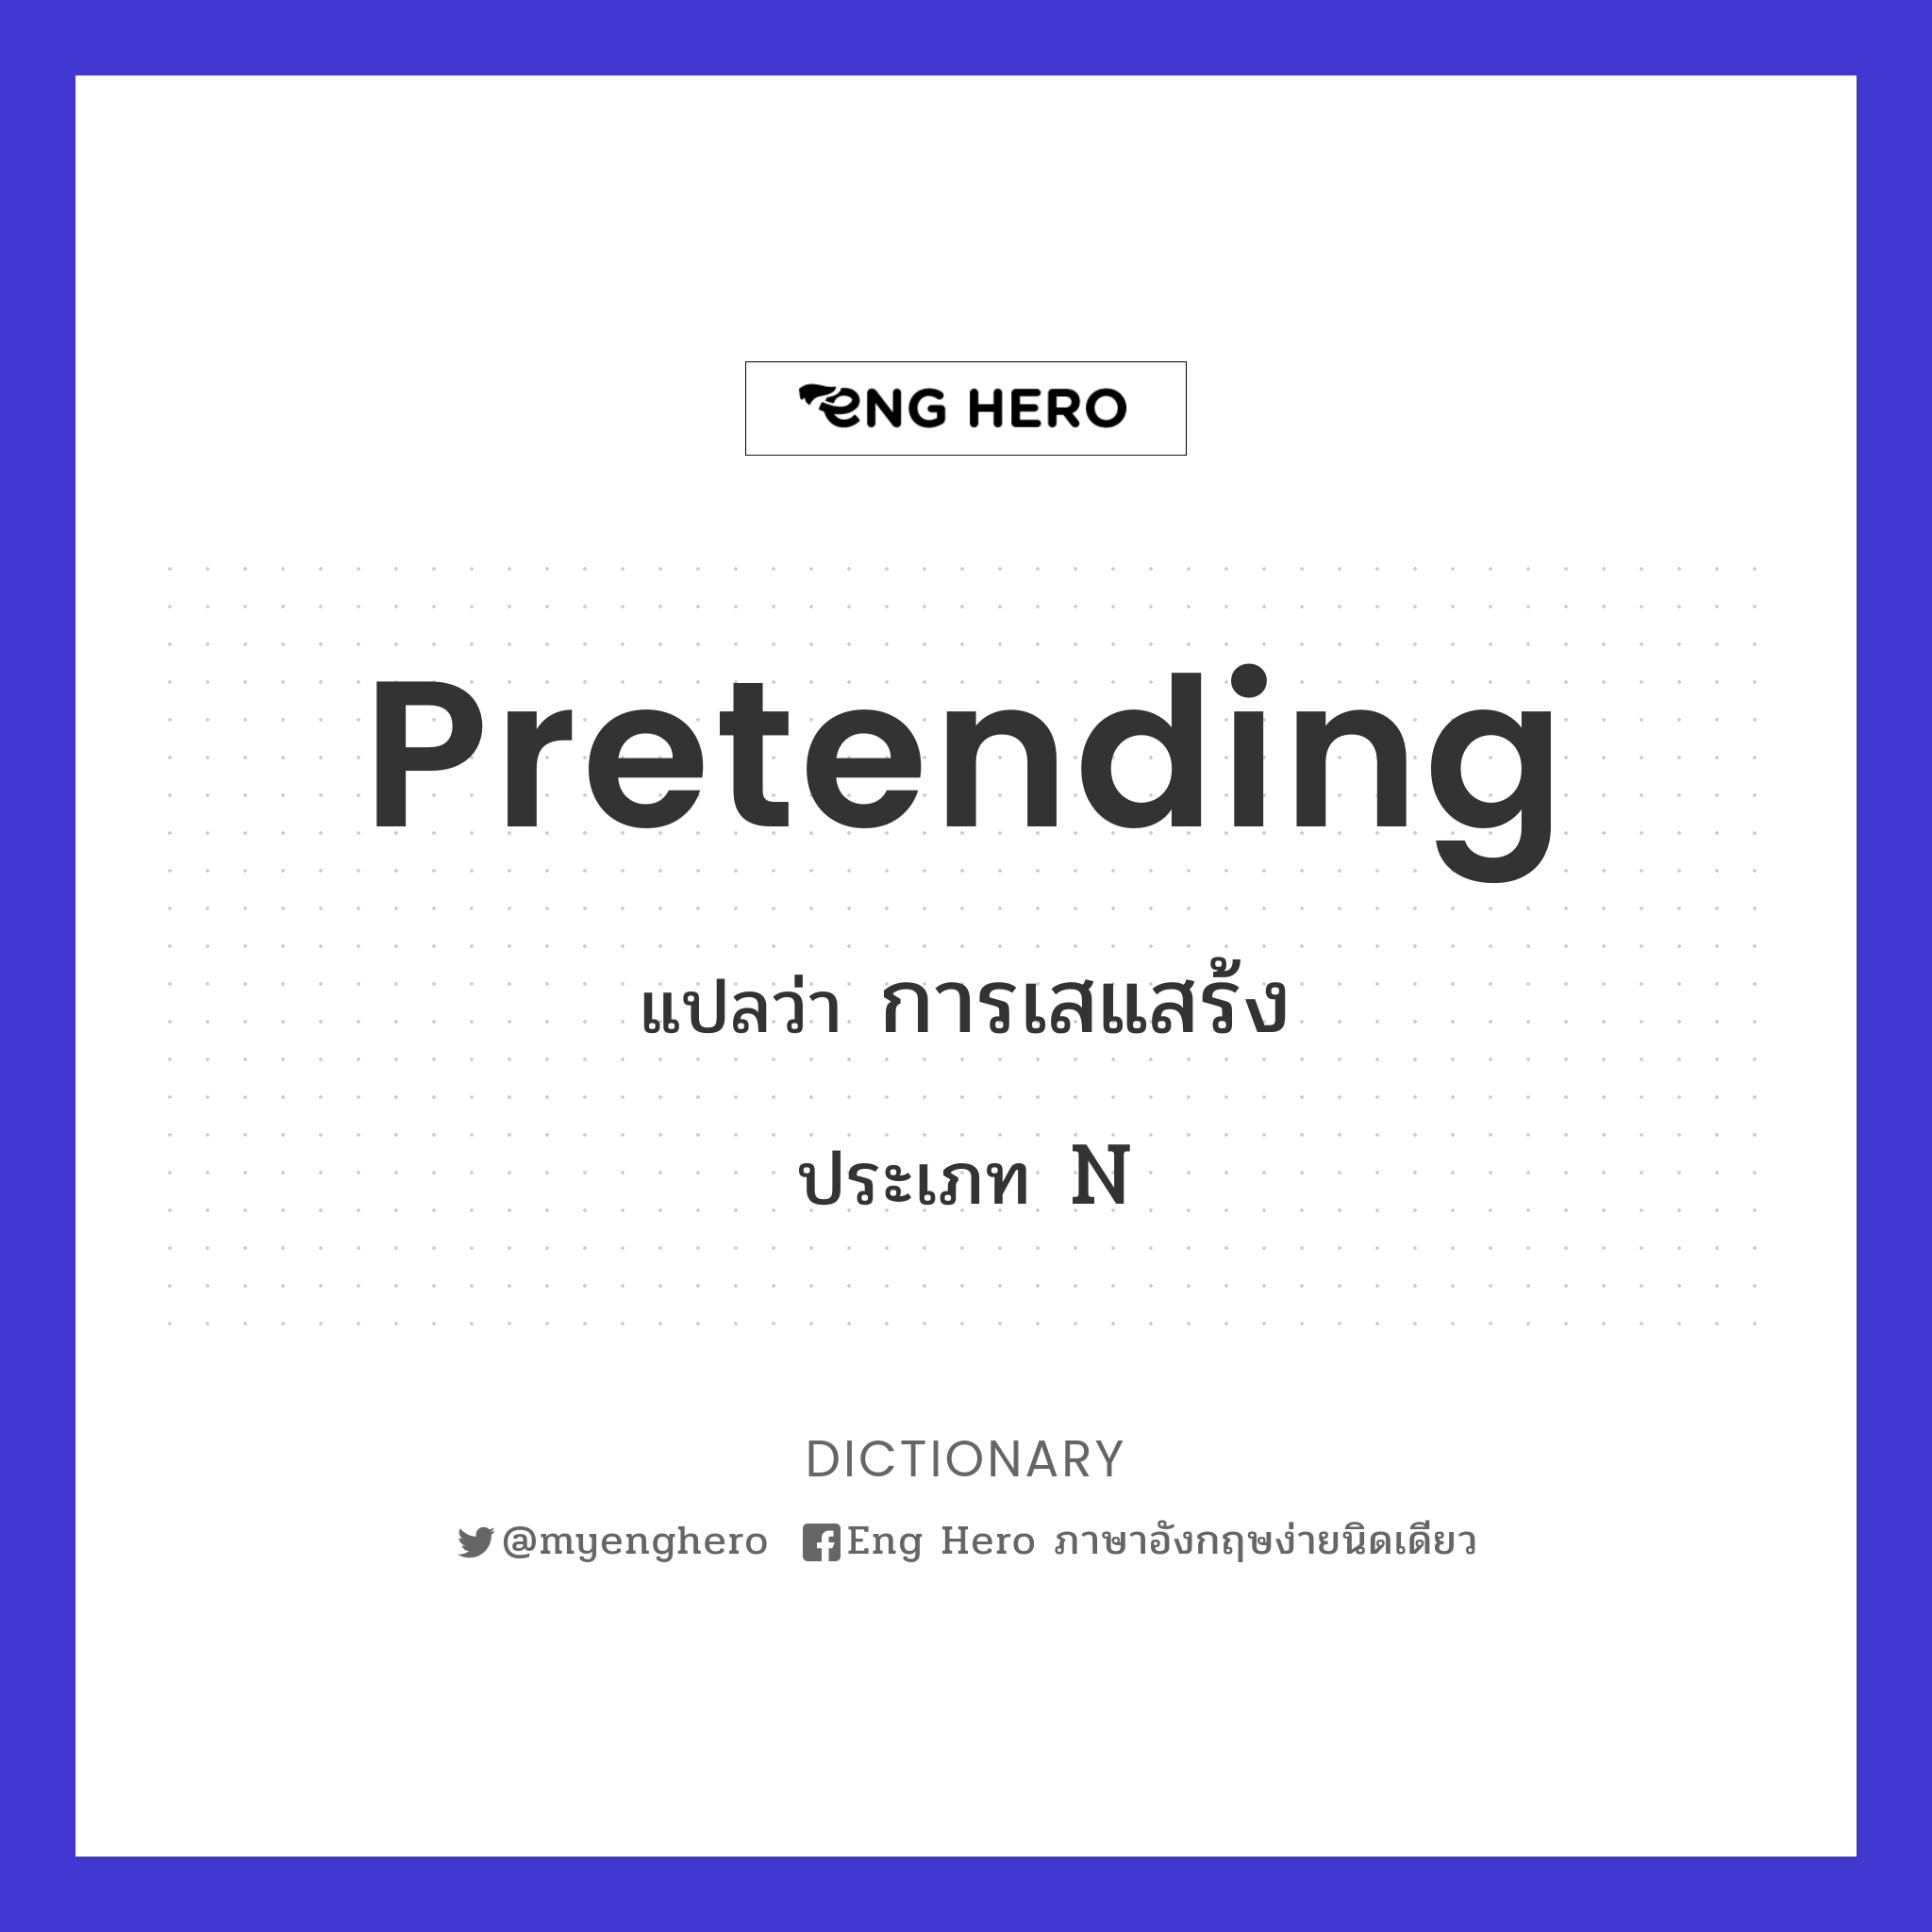 pretending